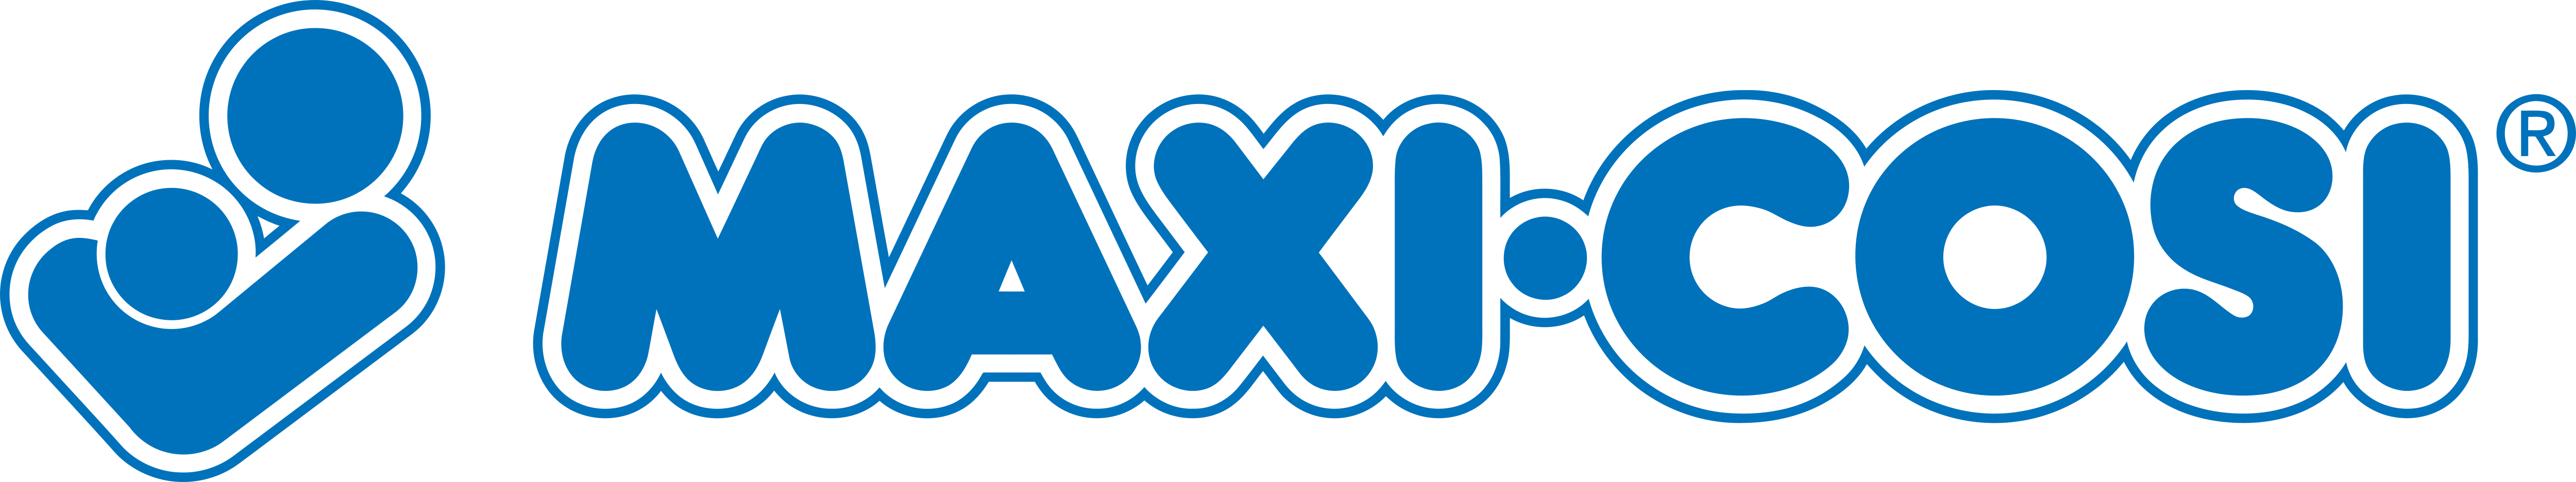 Maxi cosi logo